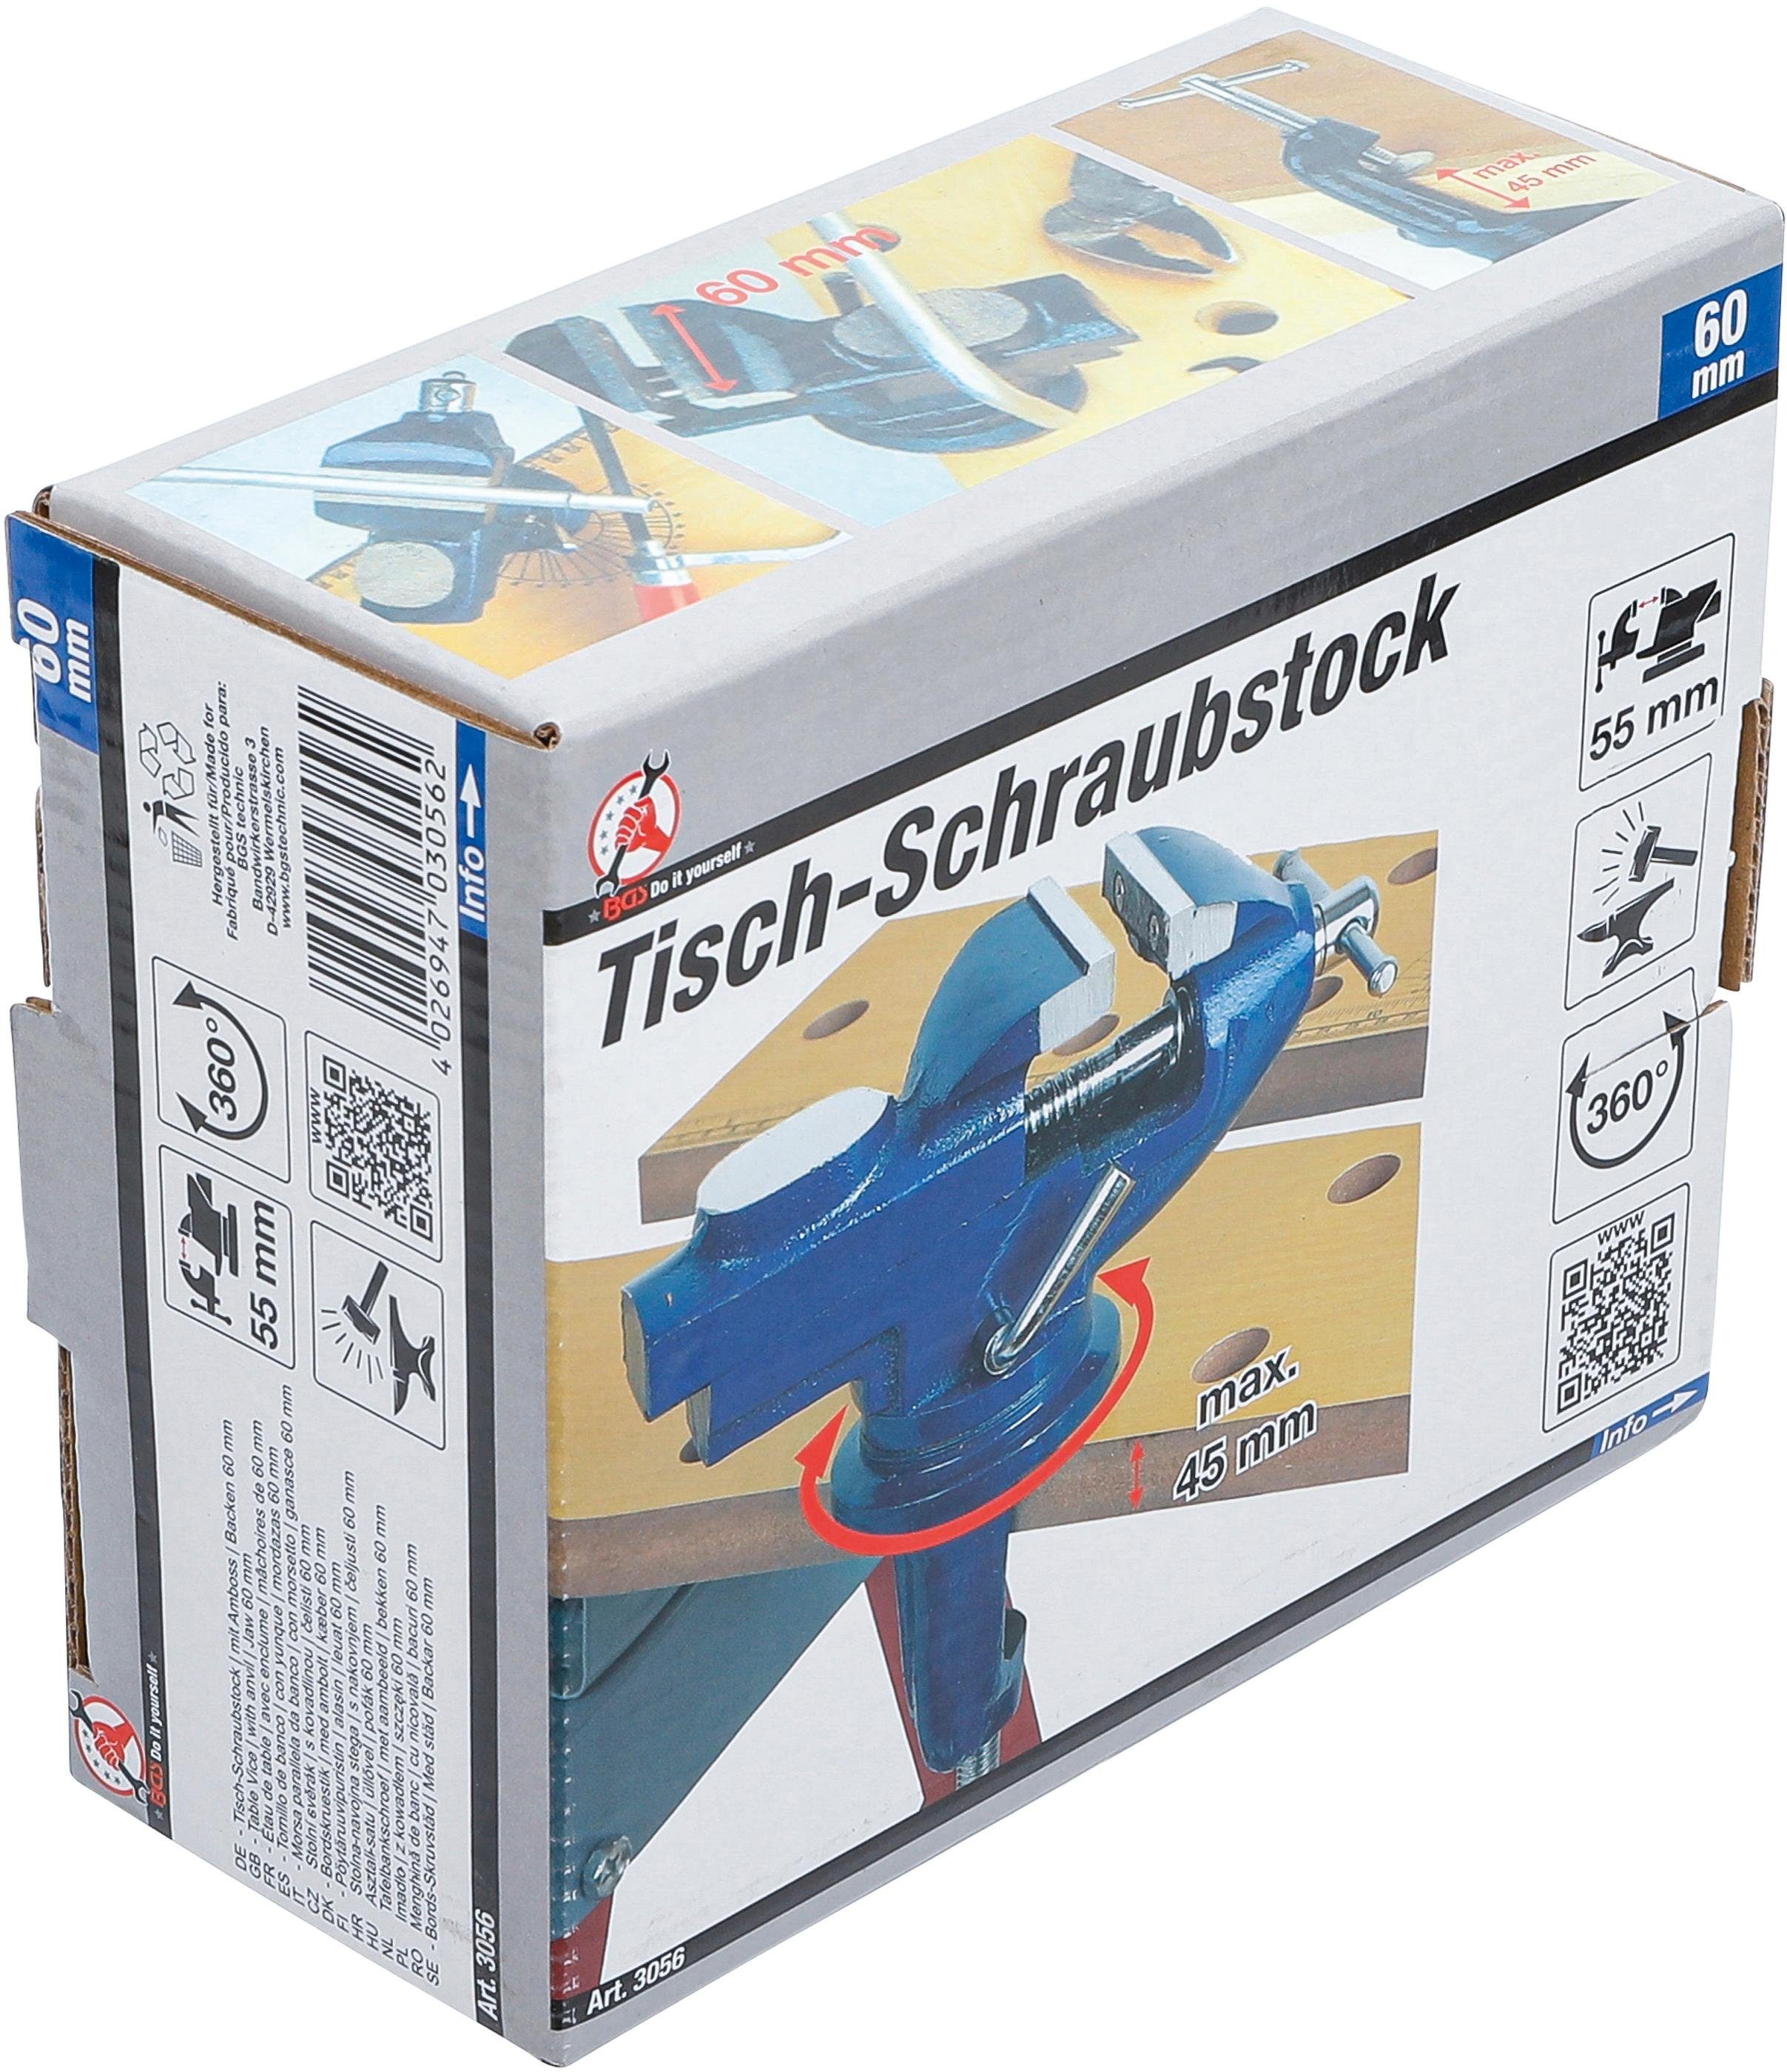 mm BGS Tisch-Schraubstock, 60 mit Amboss, Backen Schraubstock technic